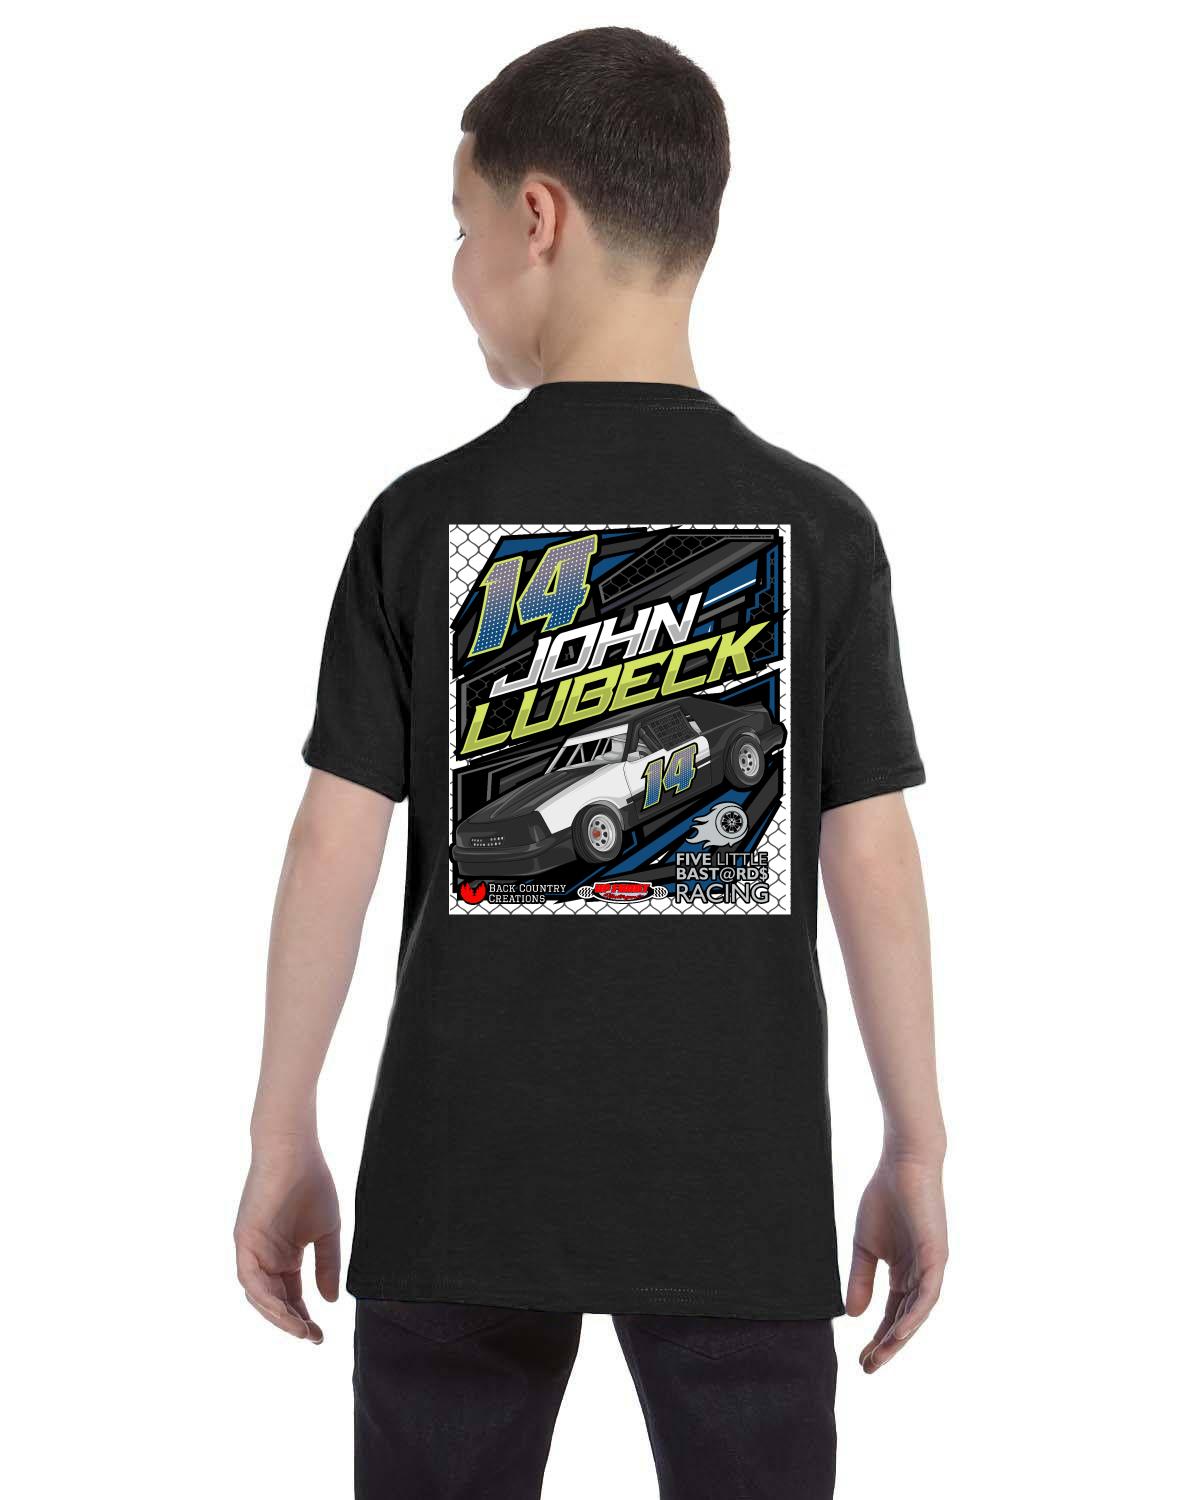 John Lubeck / Upfront Motorsports Youth T-Shirt